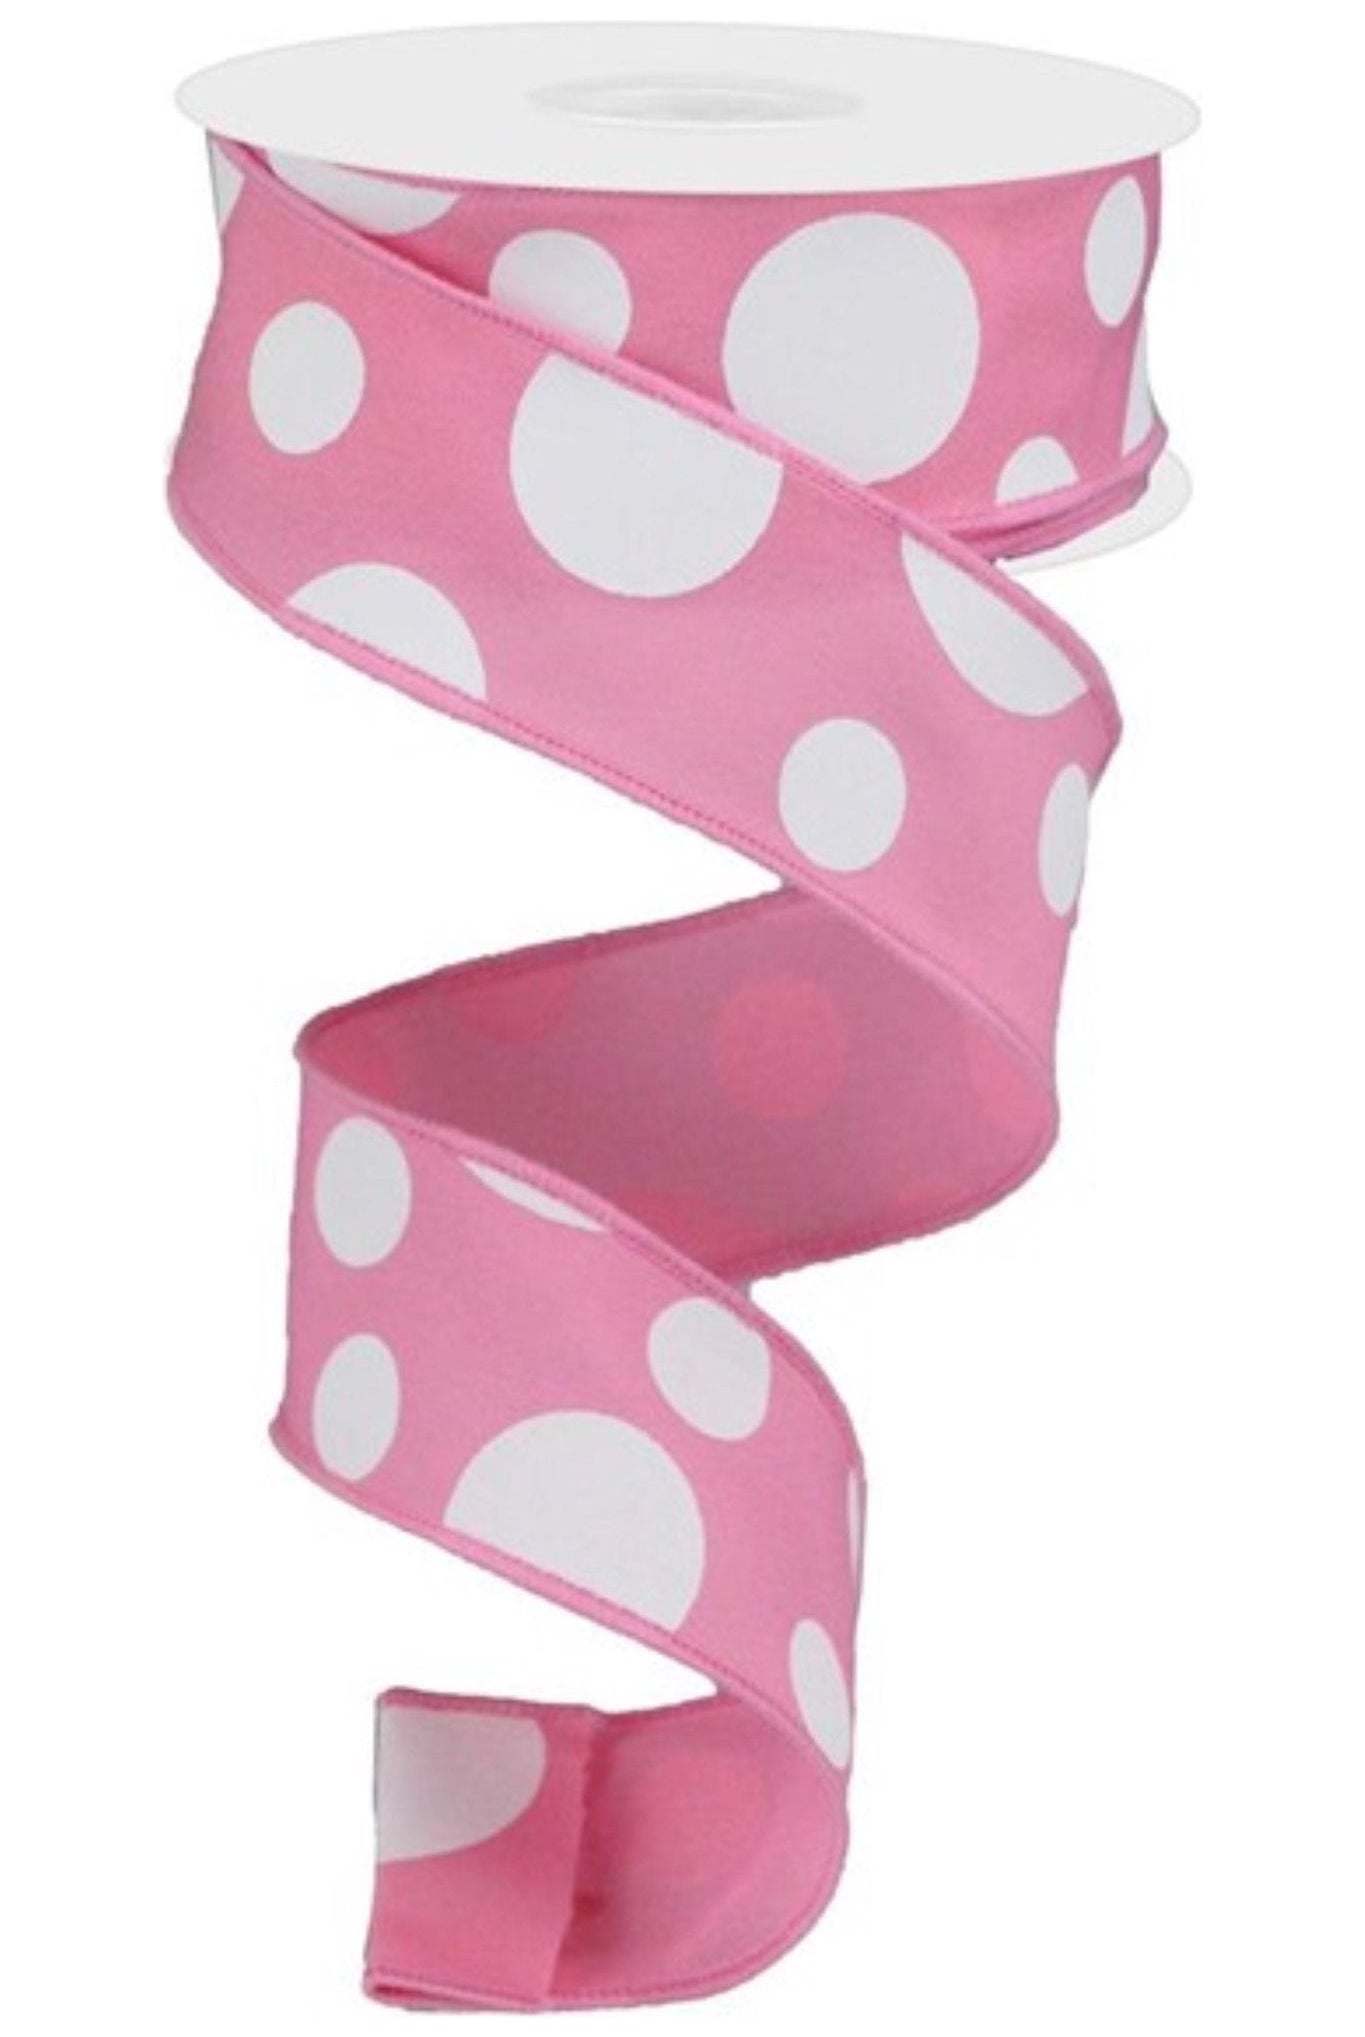 Shop For 1.5" Giant Three Size Polka Dot Ribbon: Pink & White (10 Yards) RGB114722